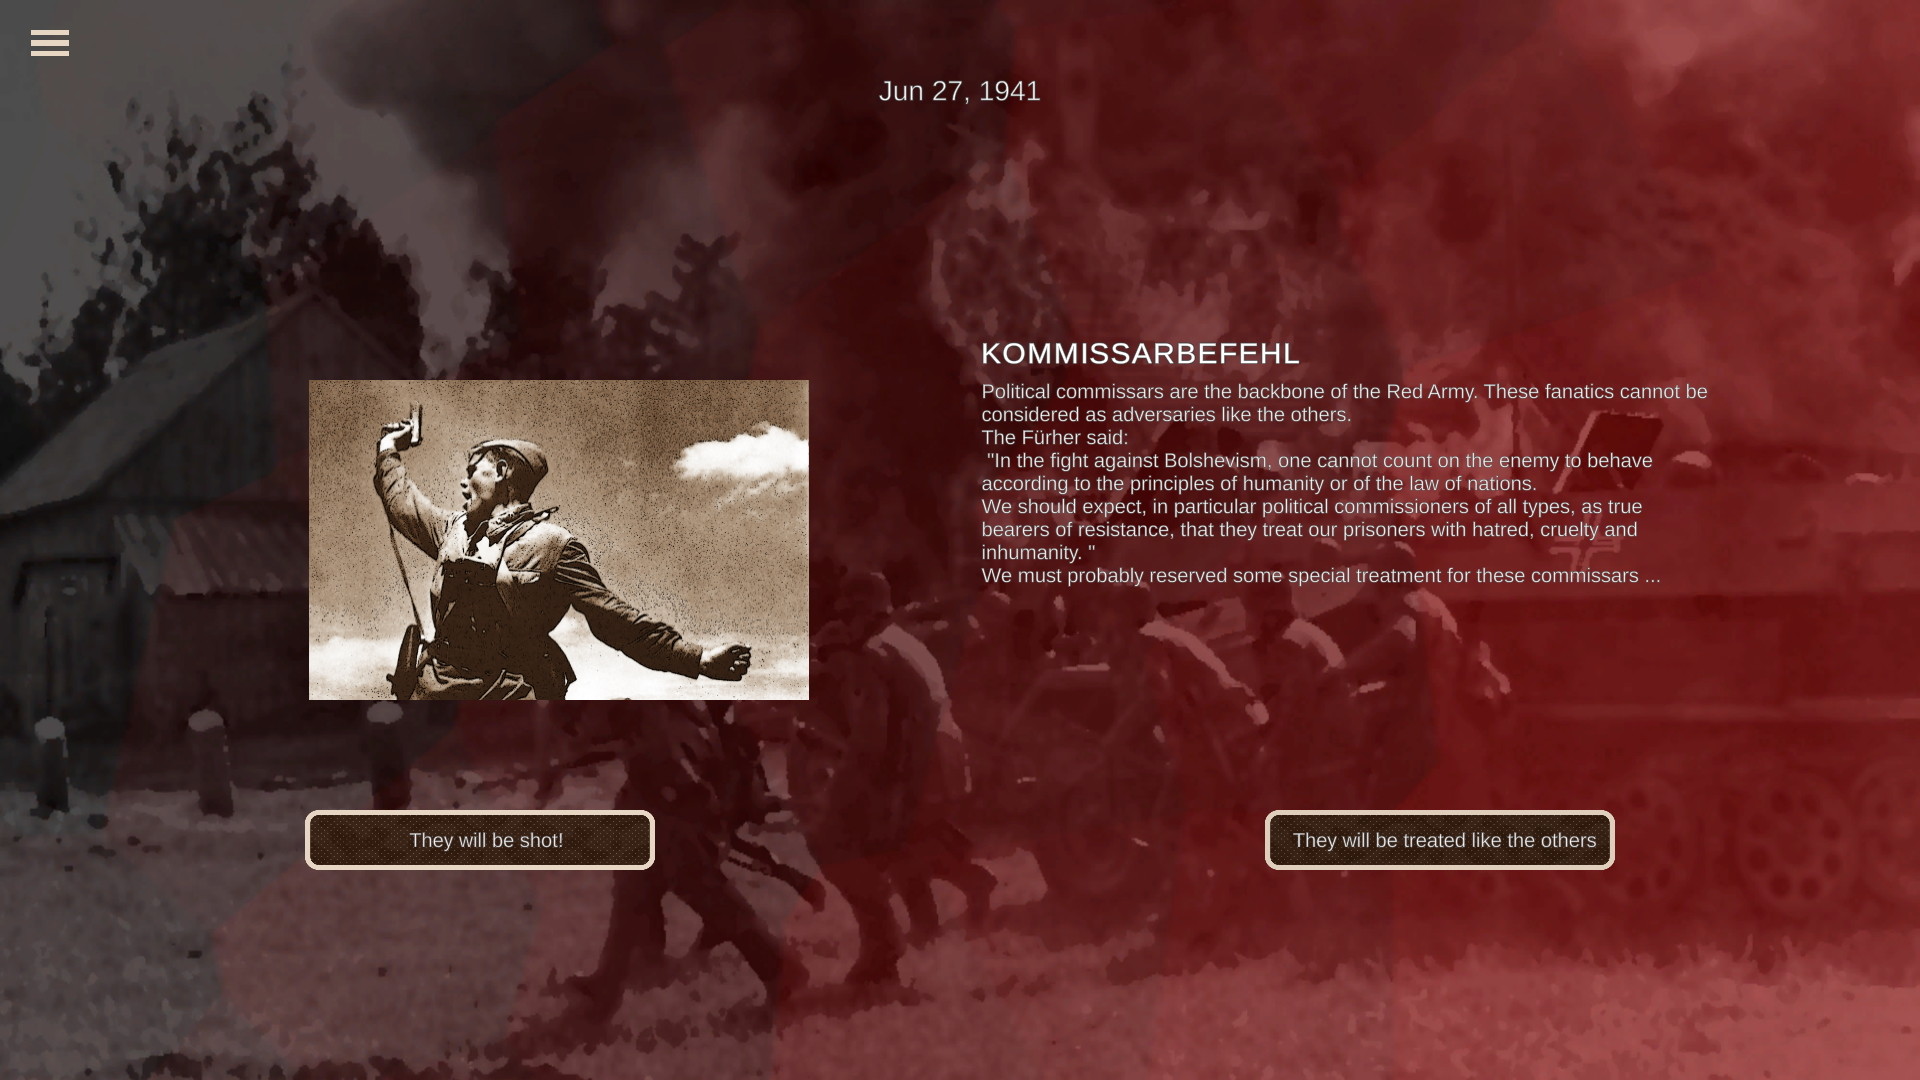 Cauldrons of War - Barbarossa Free Download